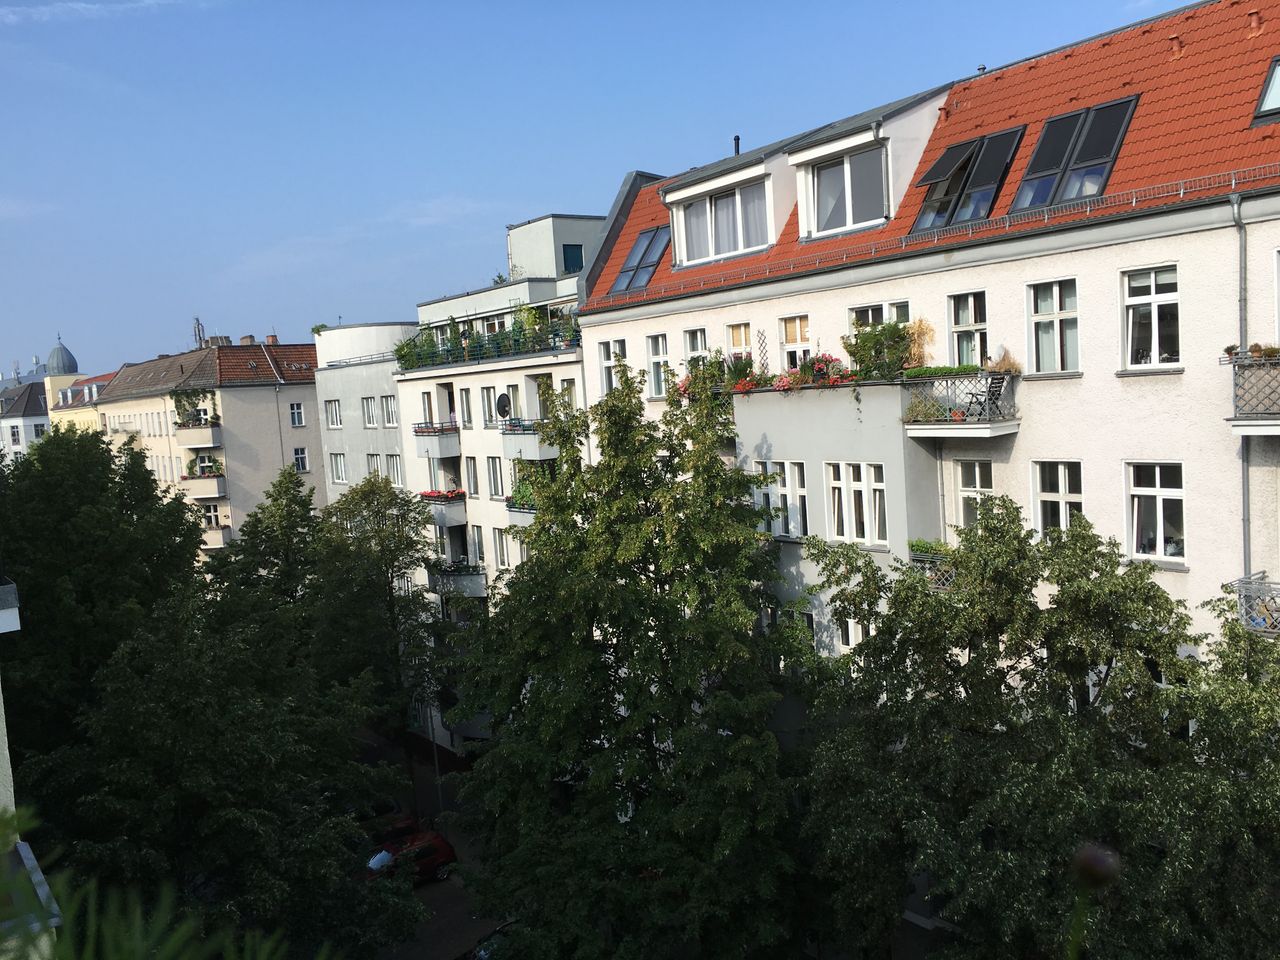 Sunny City Apartment with balcony in Prenzlauer Berg